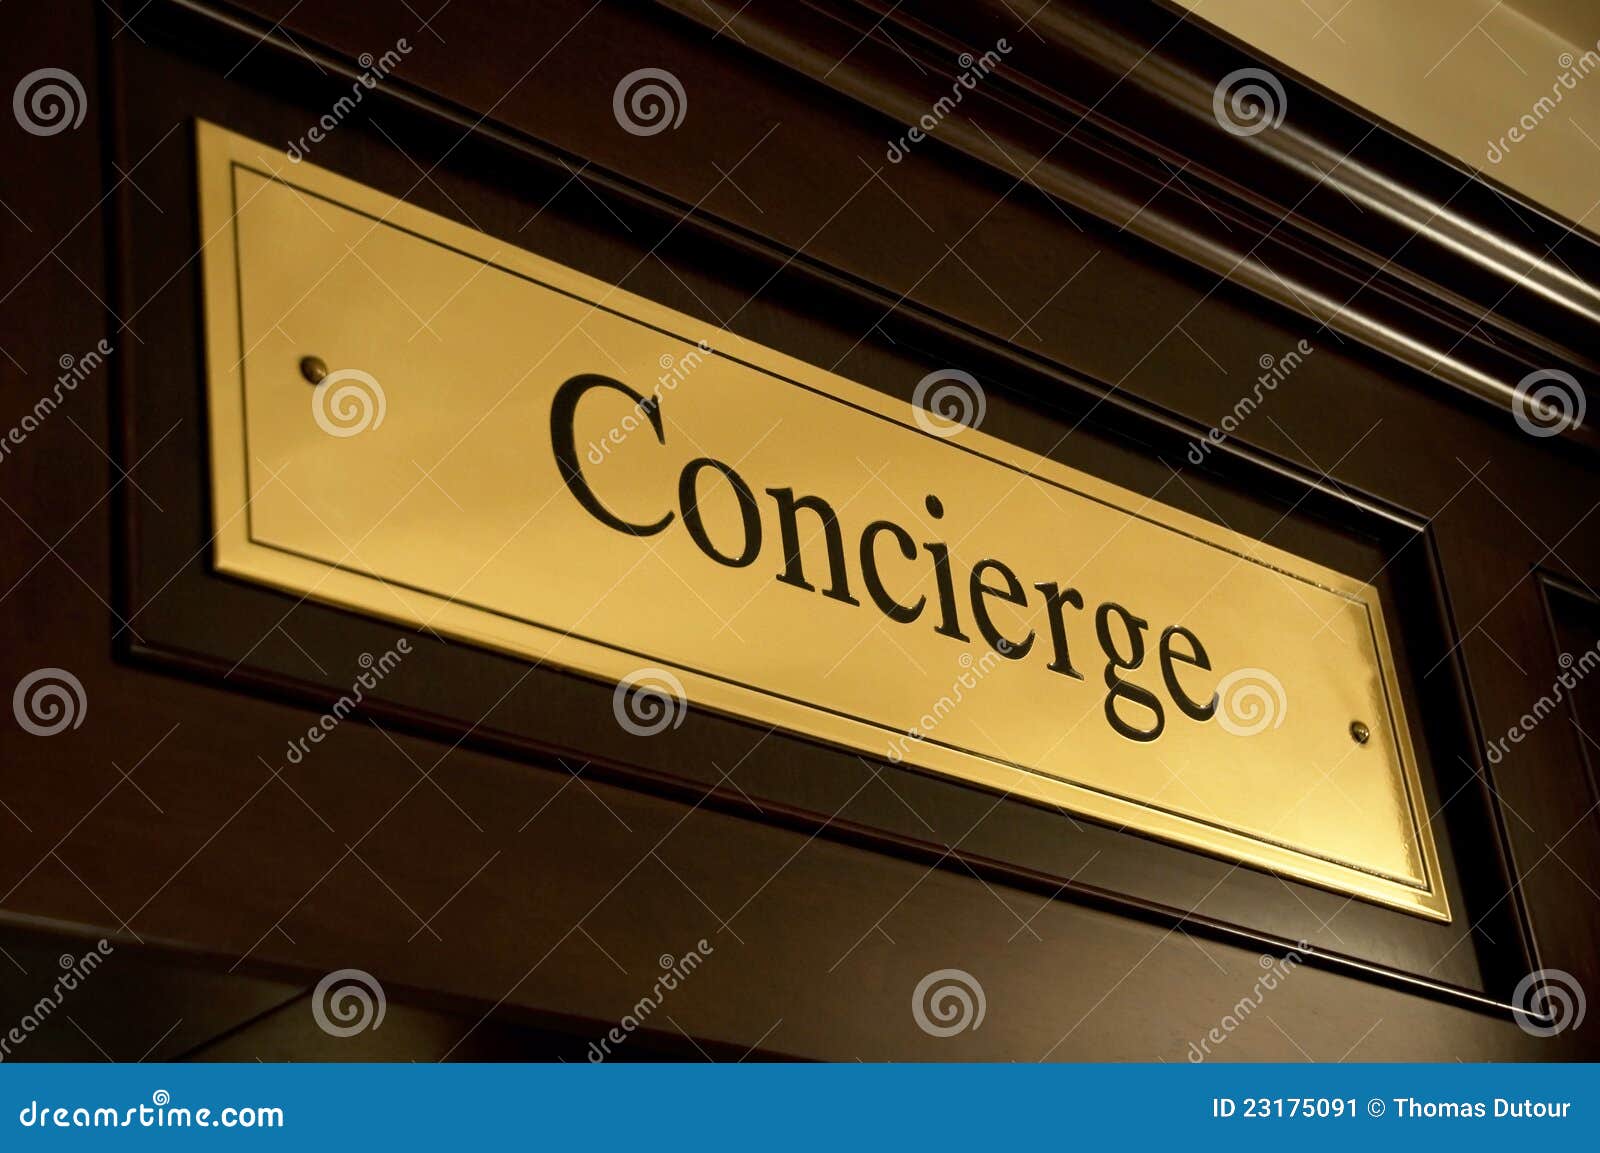 concierge sign